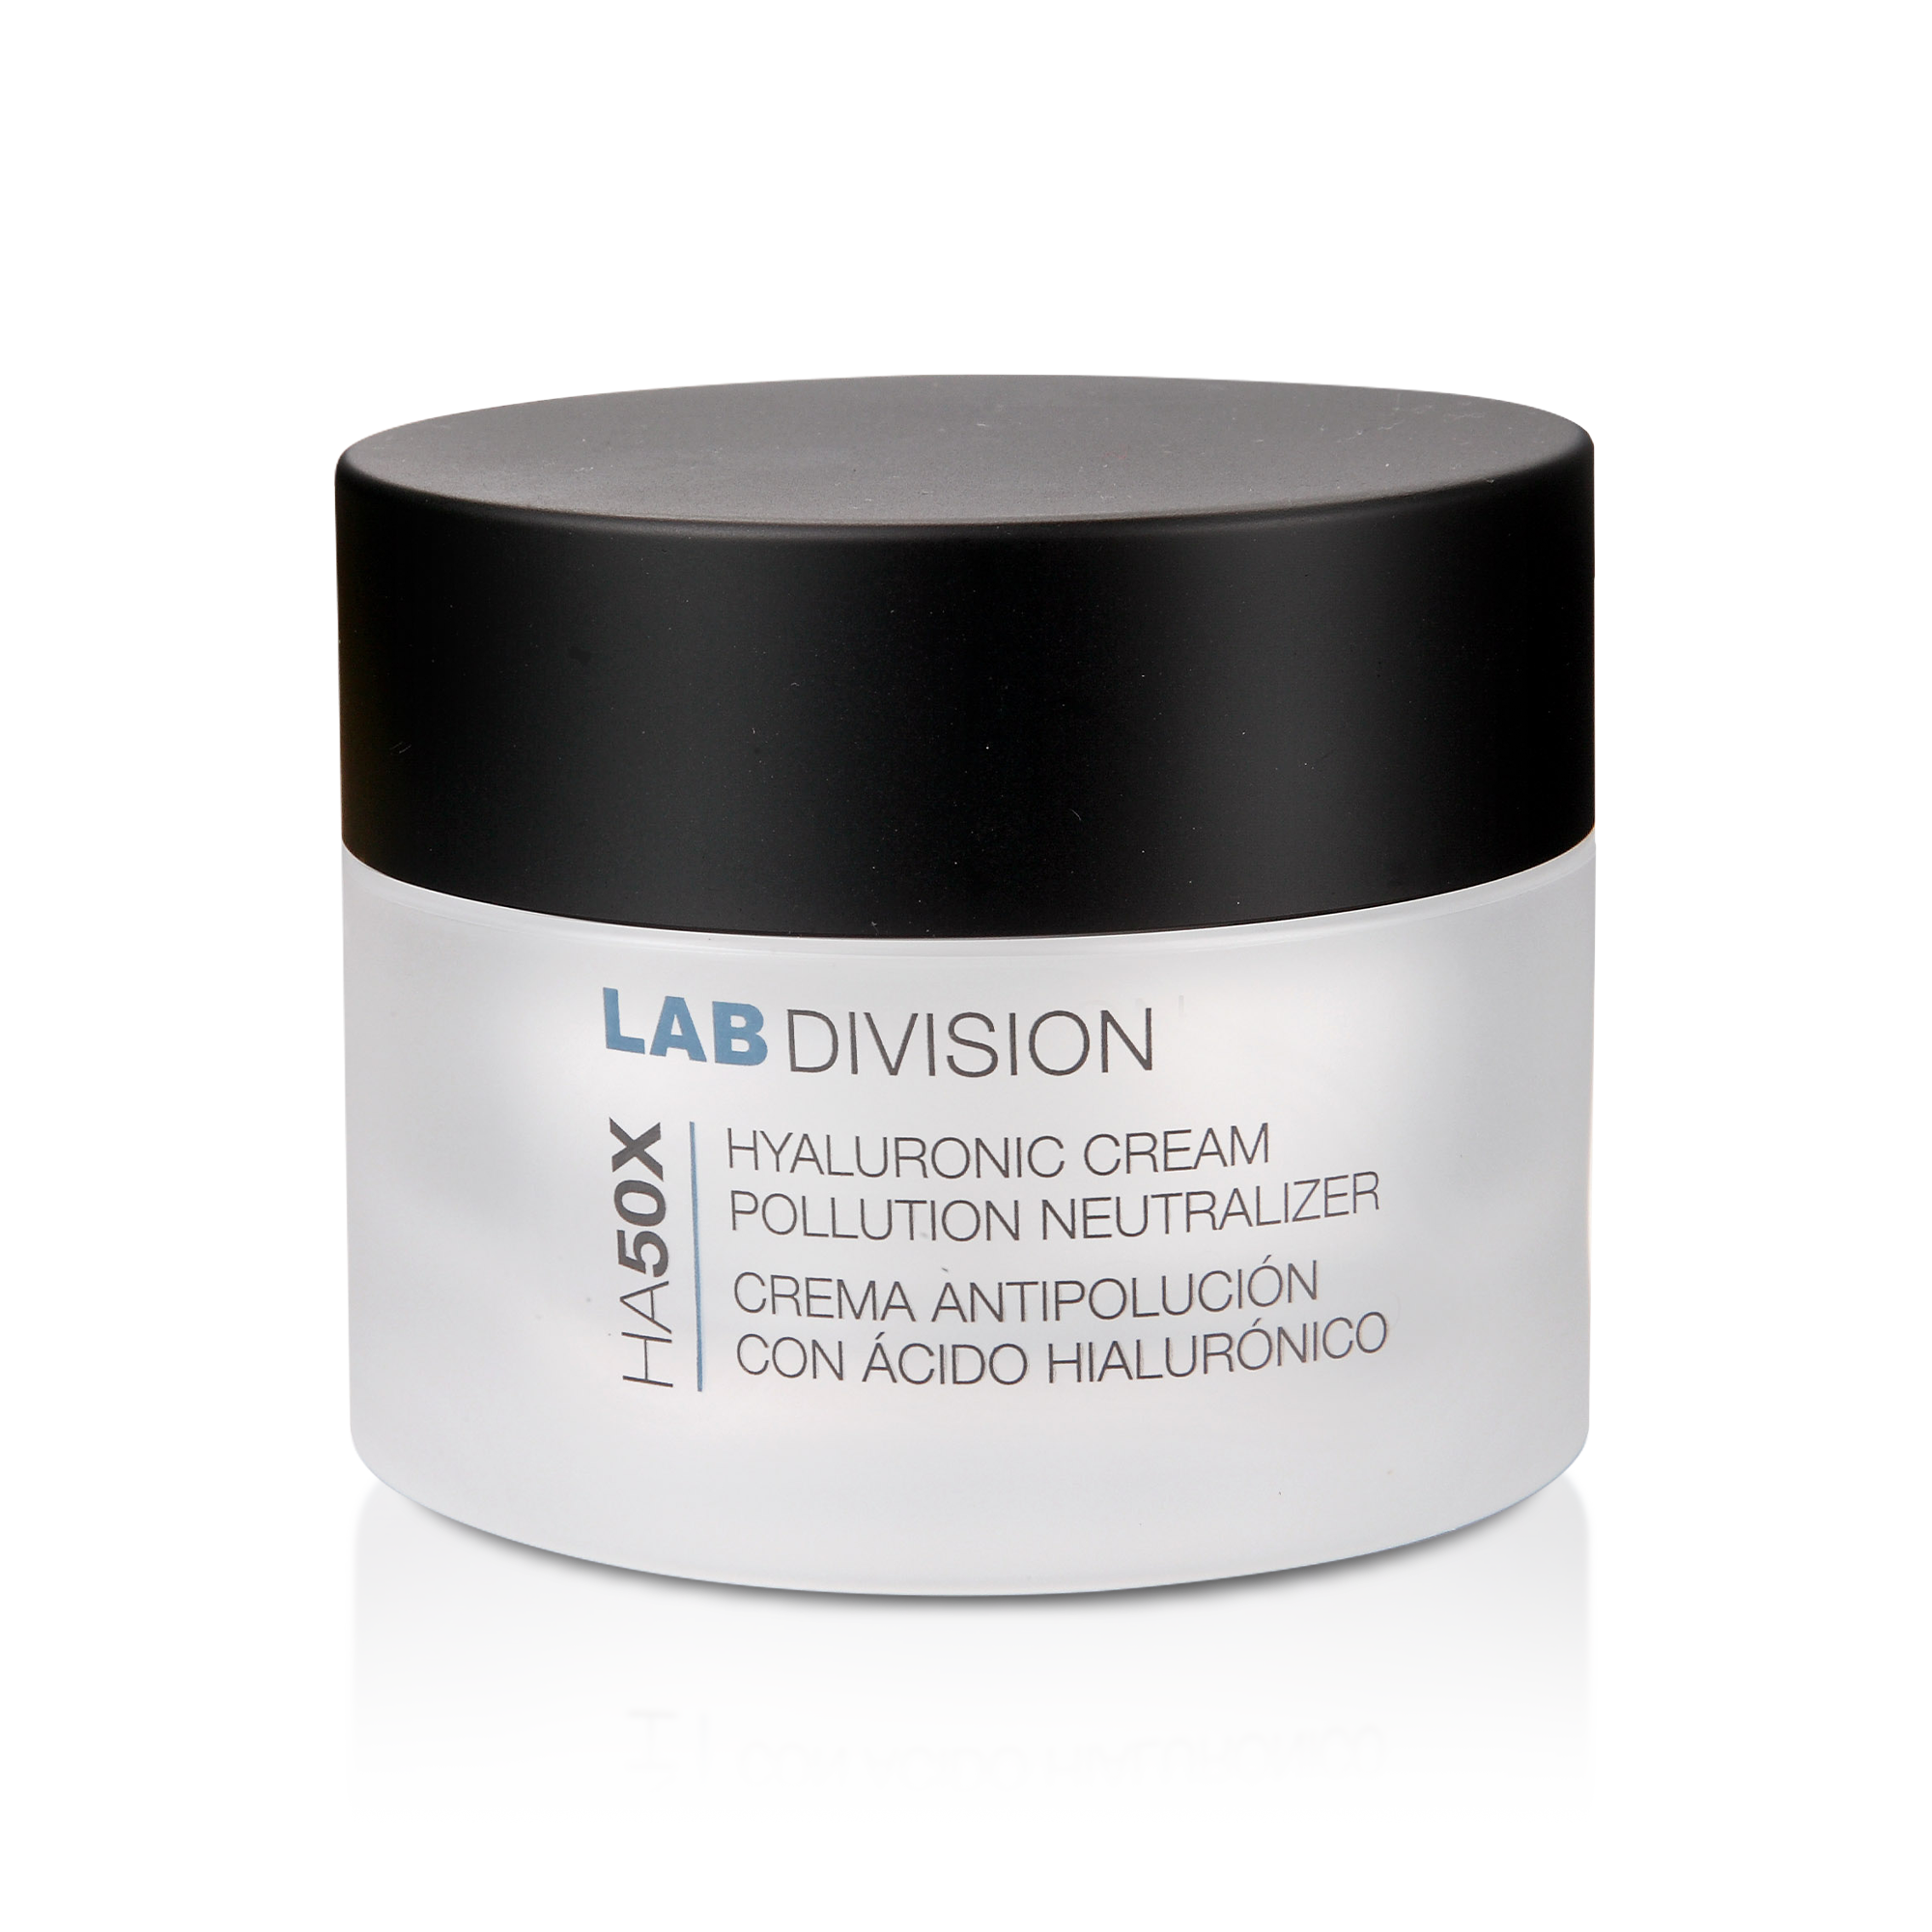 Lab Division HA50X Hyaluronic Cream Pollution Neutralizer